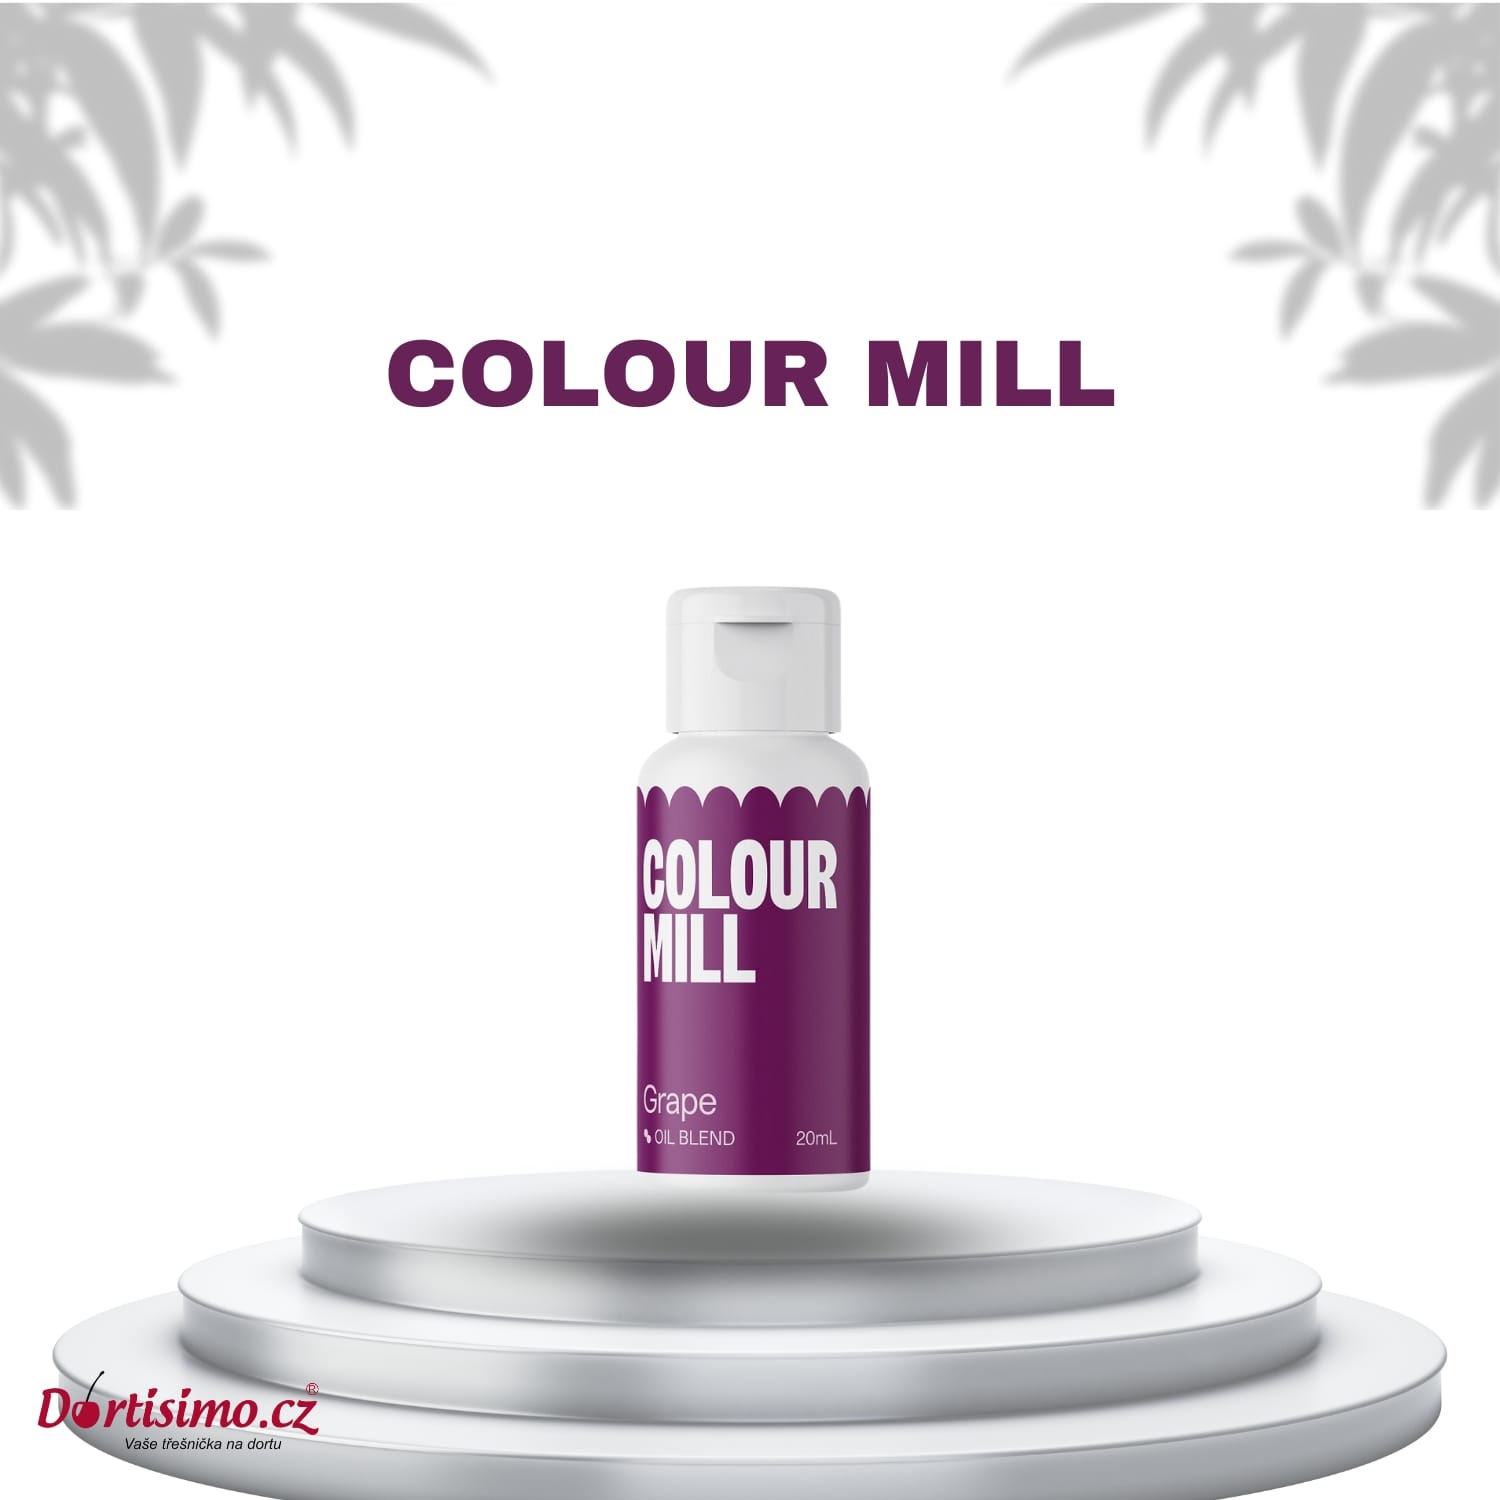 Obrázek k výrobku 23688 - Colour Mill olejová farba Grape (20ml)